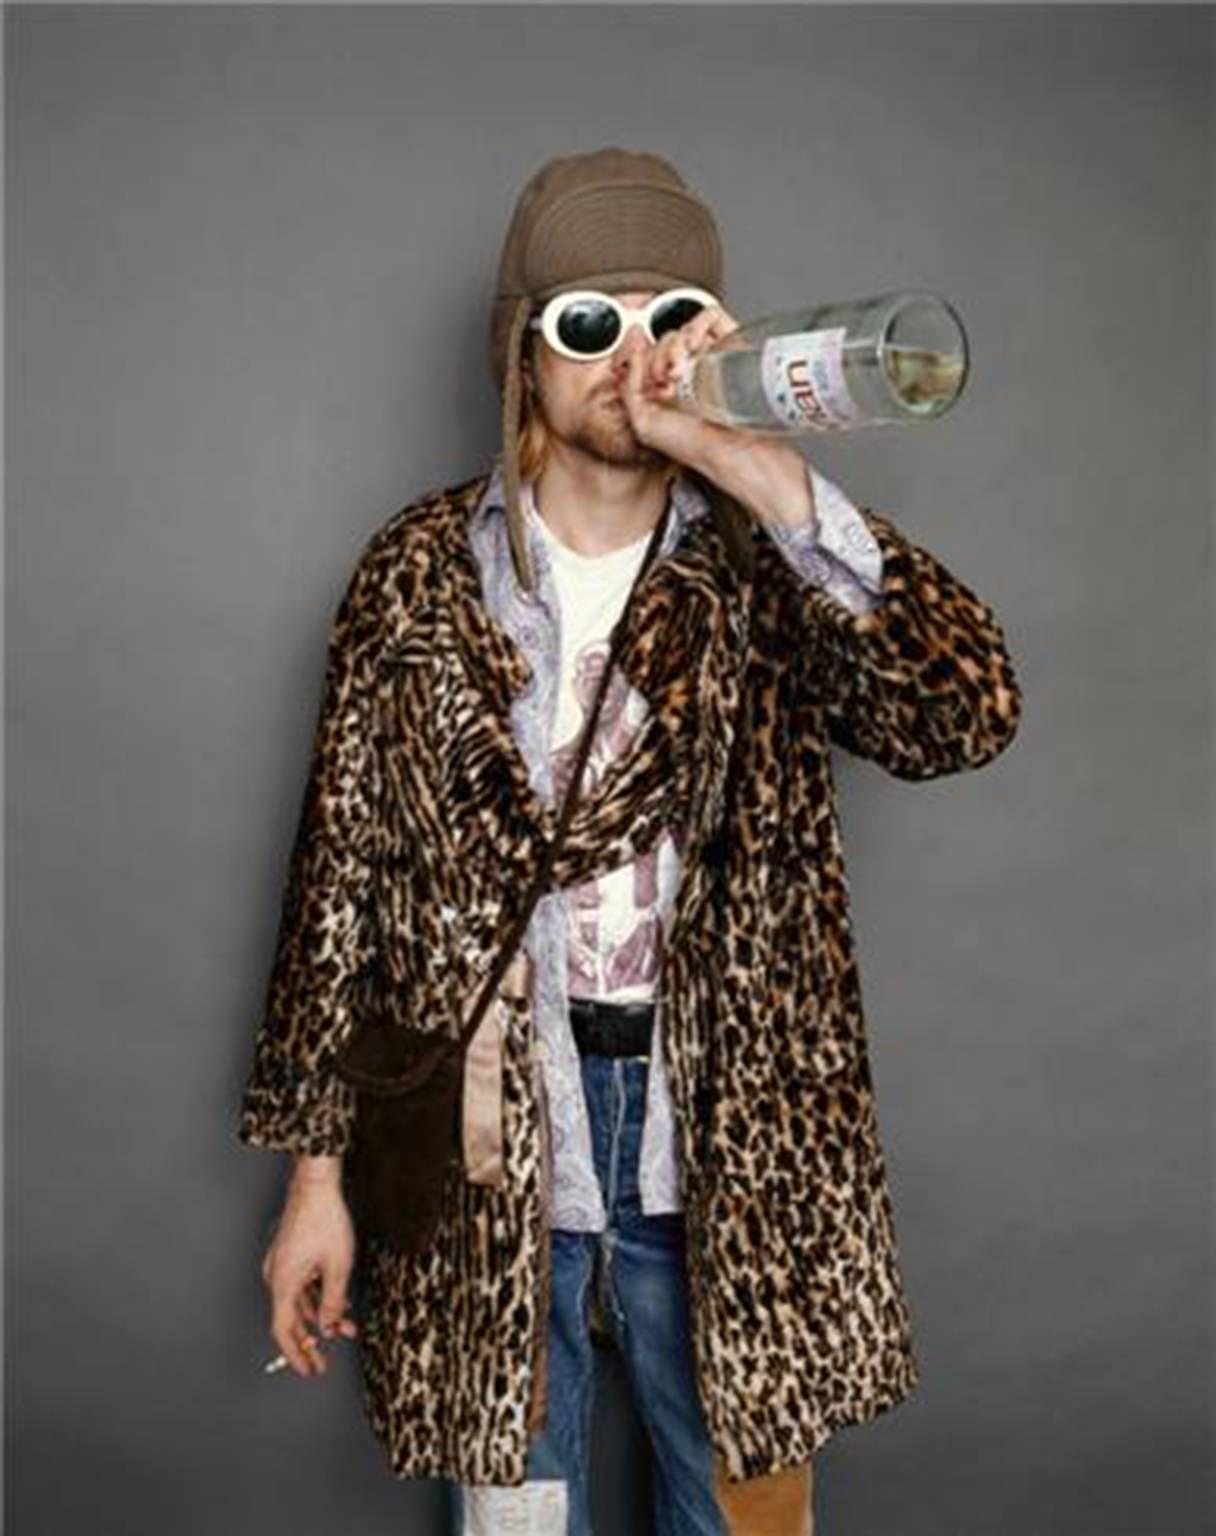 Kurt Cobain; Drinking Evian water